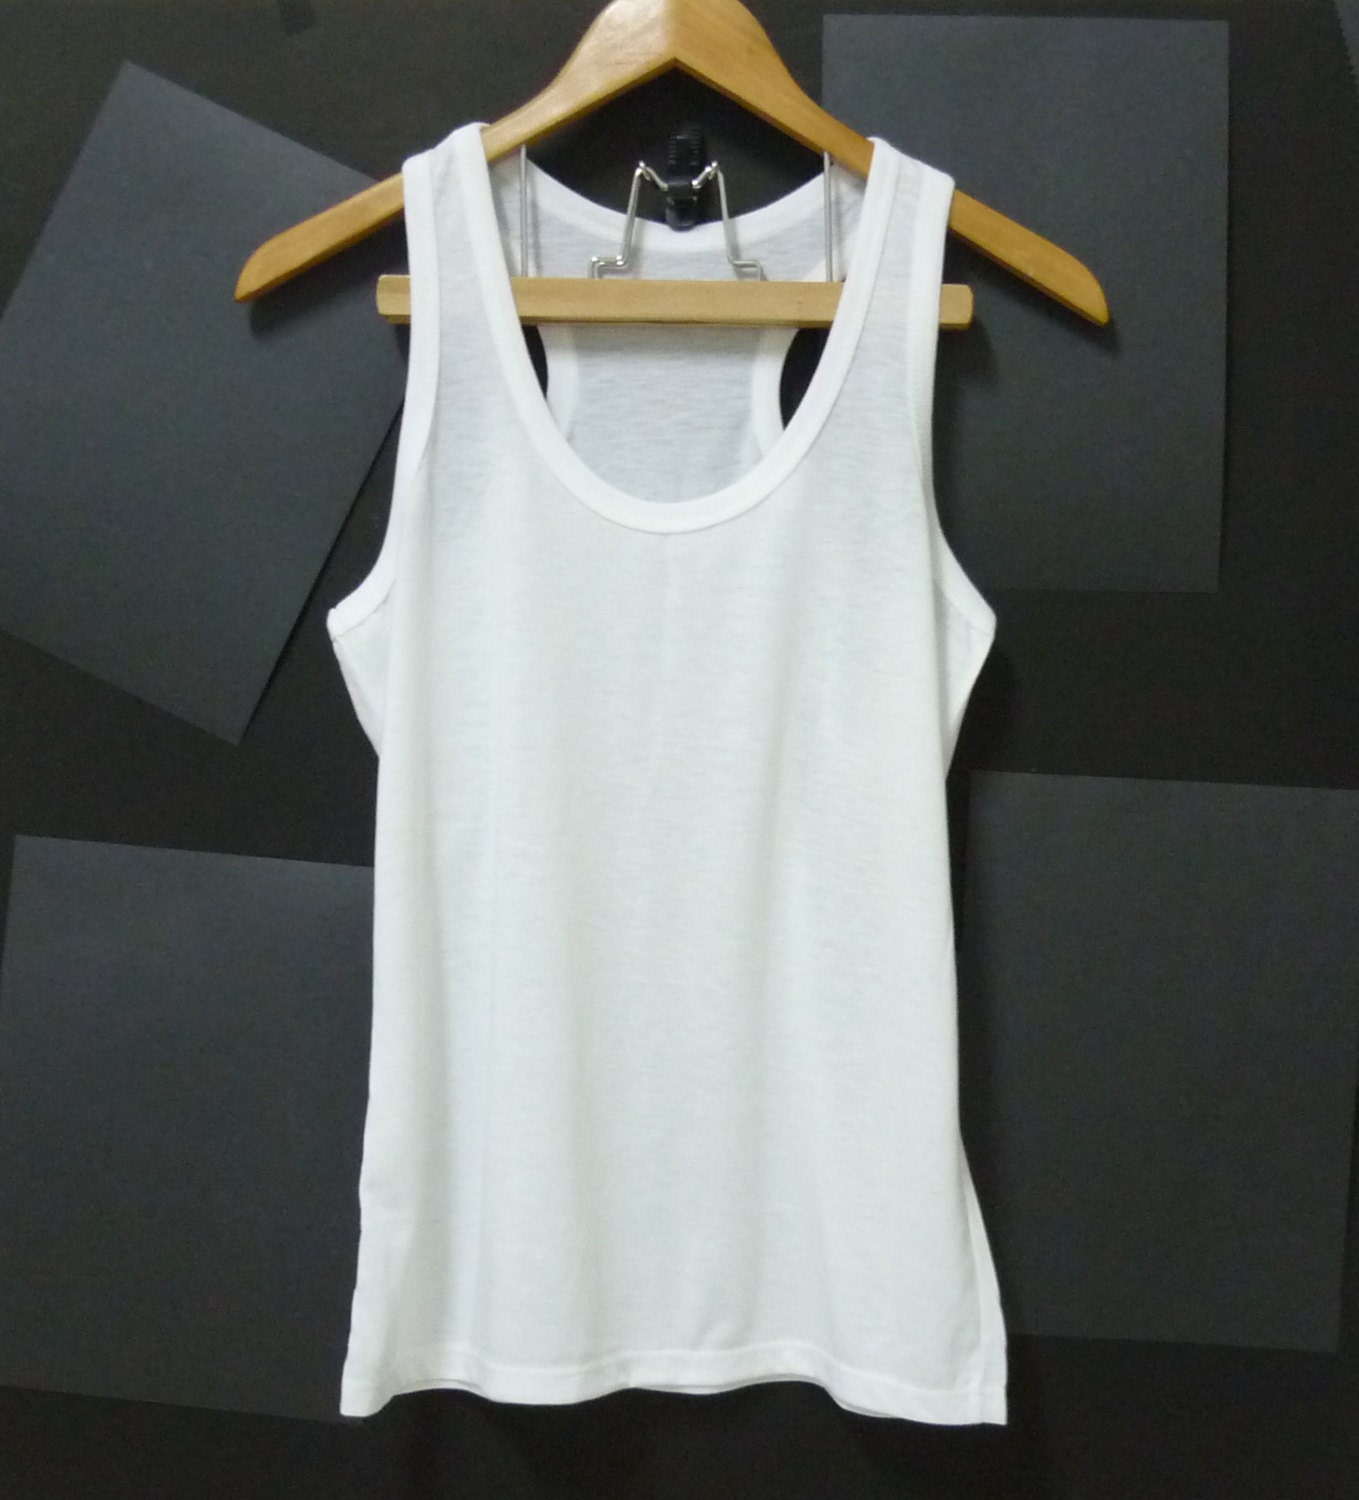 White plain Tank top size S/M/L plus size shirts by CuteClassic